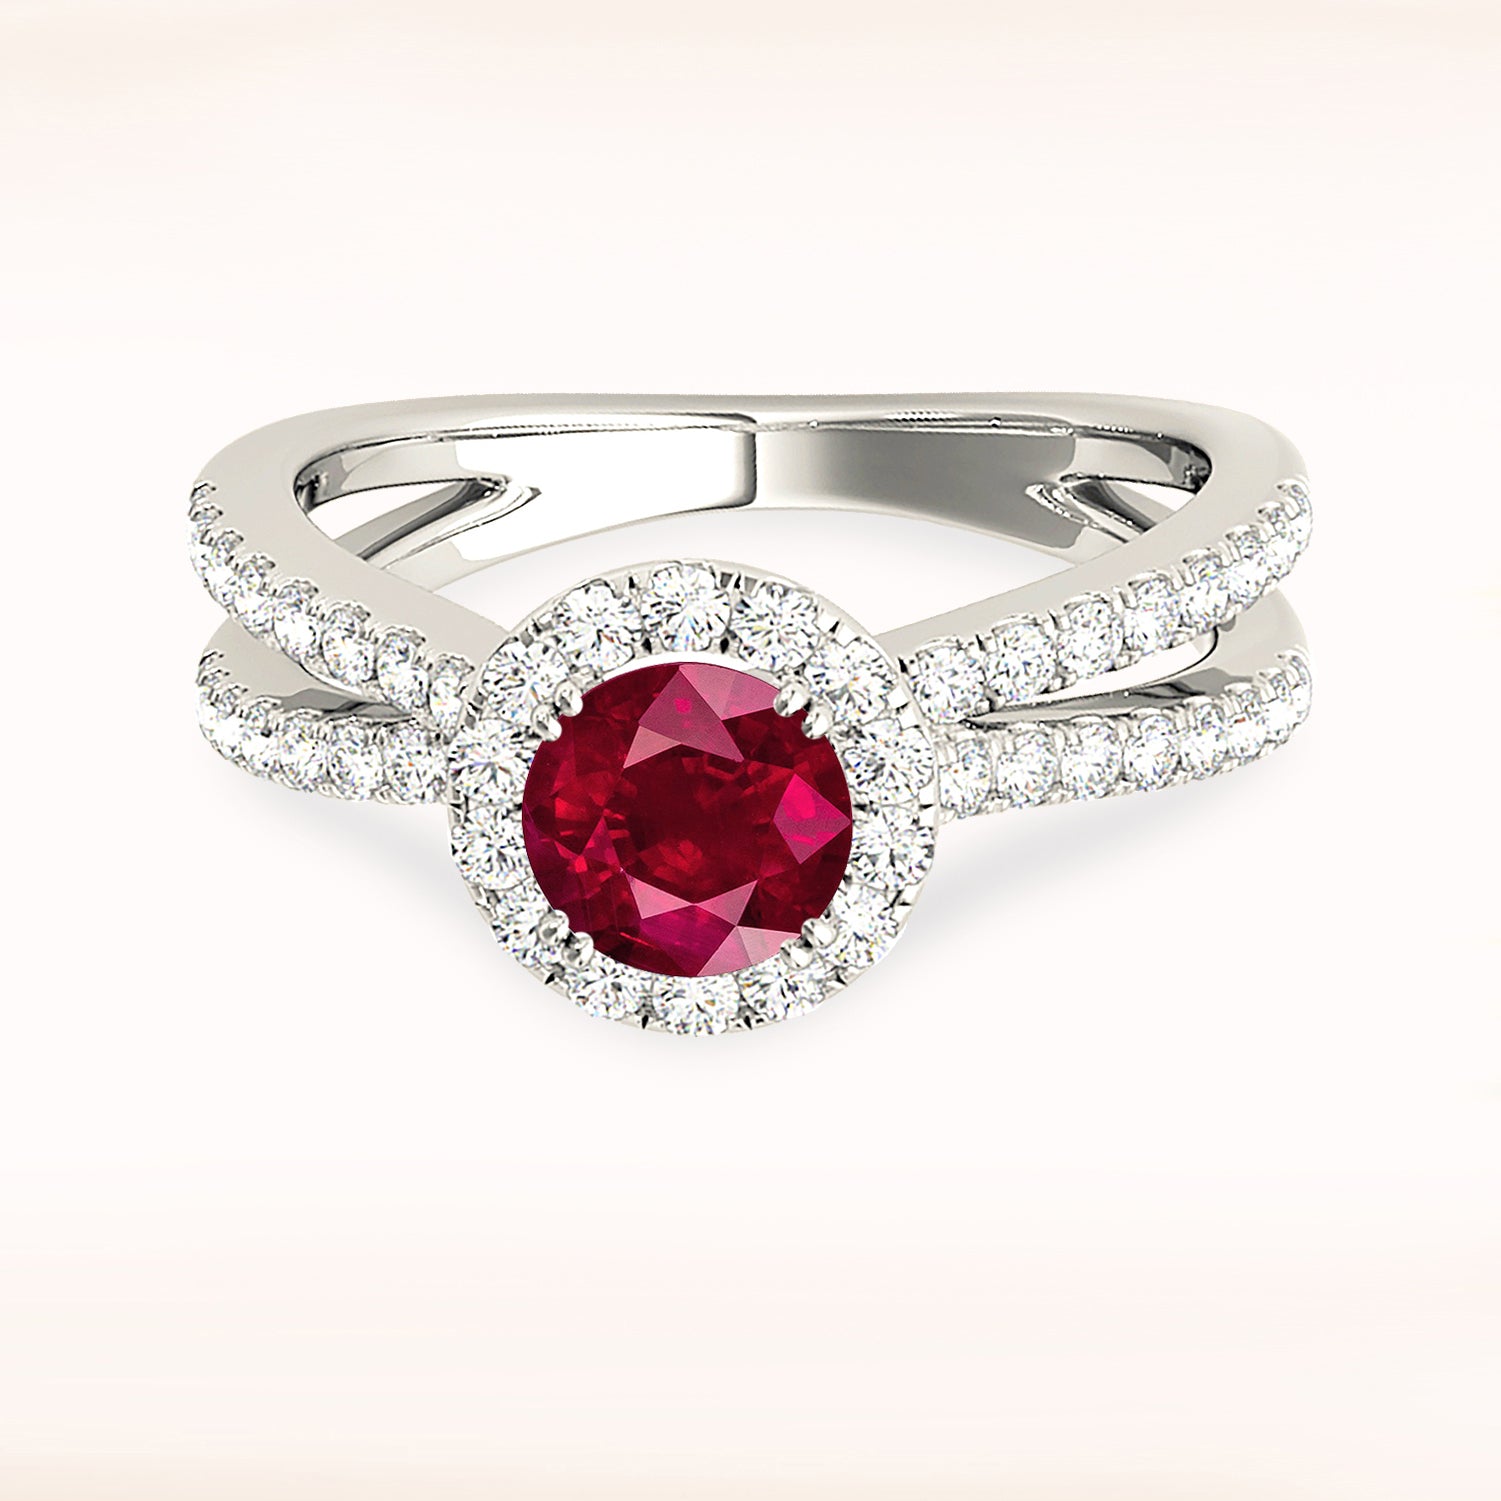 1.35 ct. Genuine Ruby Ring With 0.50 ctw. Diamond Halo And Split Diamond Shank-in 14K/18K White, Yellow, Rose Gold and Platinum - Christmas Jewelry Gift -VIRABYANI